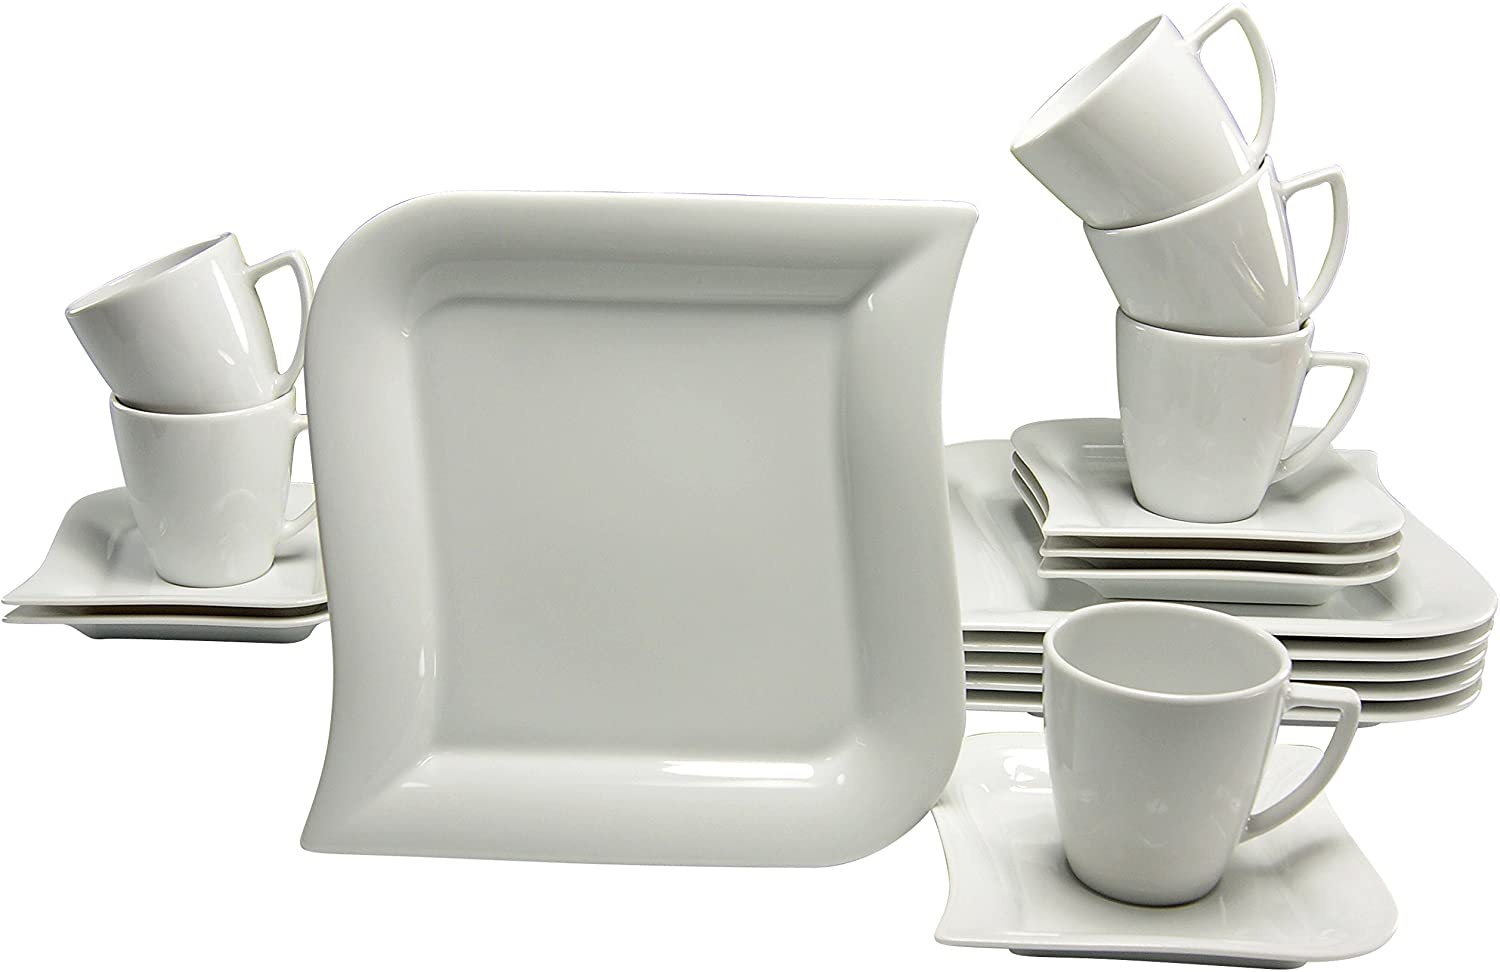 Creatable, 17150, La Scala series, 18-piece coffee set, porcelain, white, 29 x 26 x 30.5 cm, units